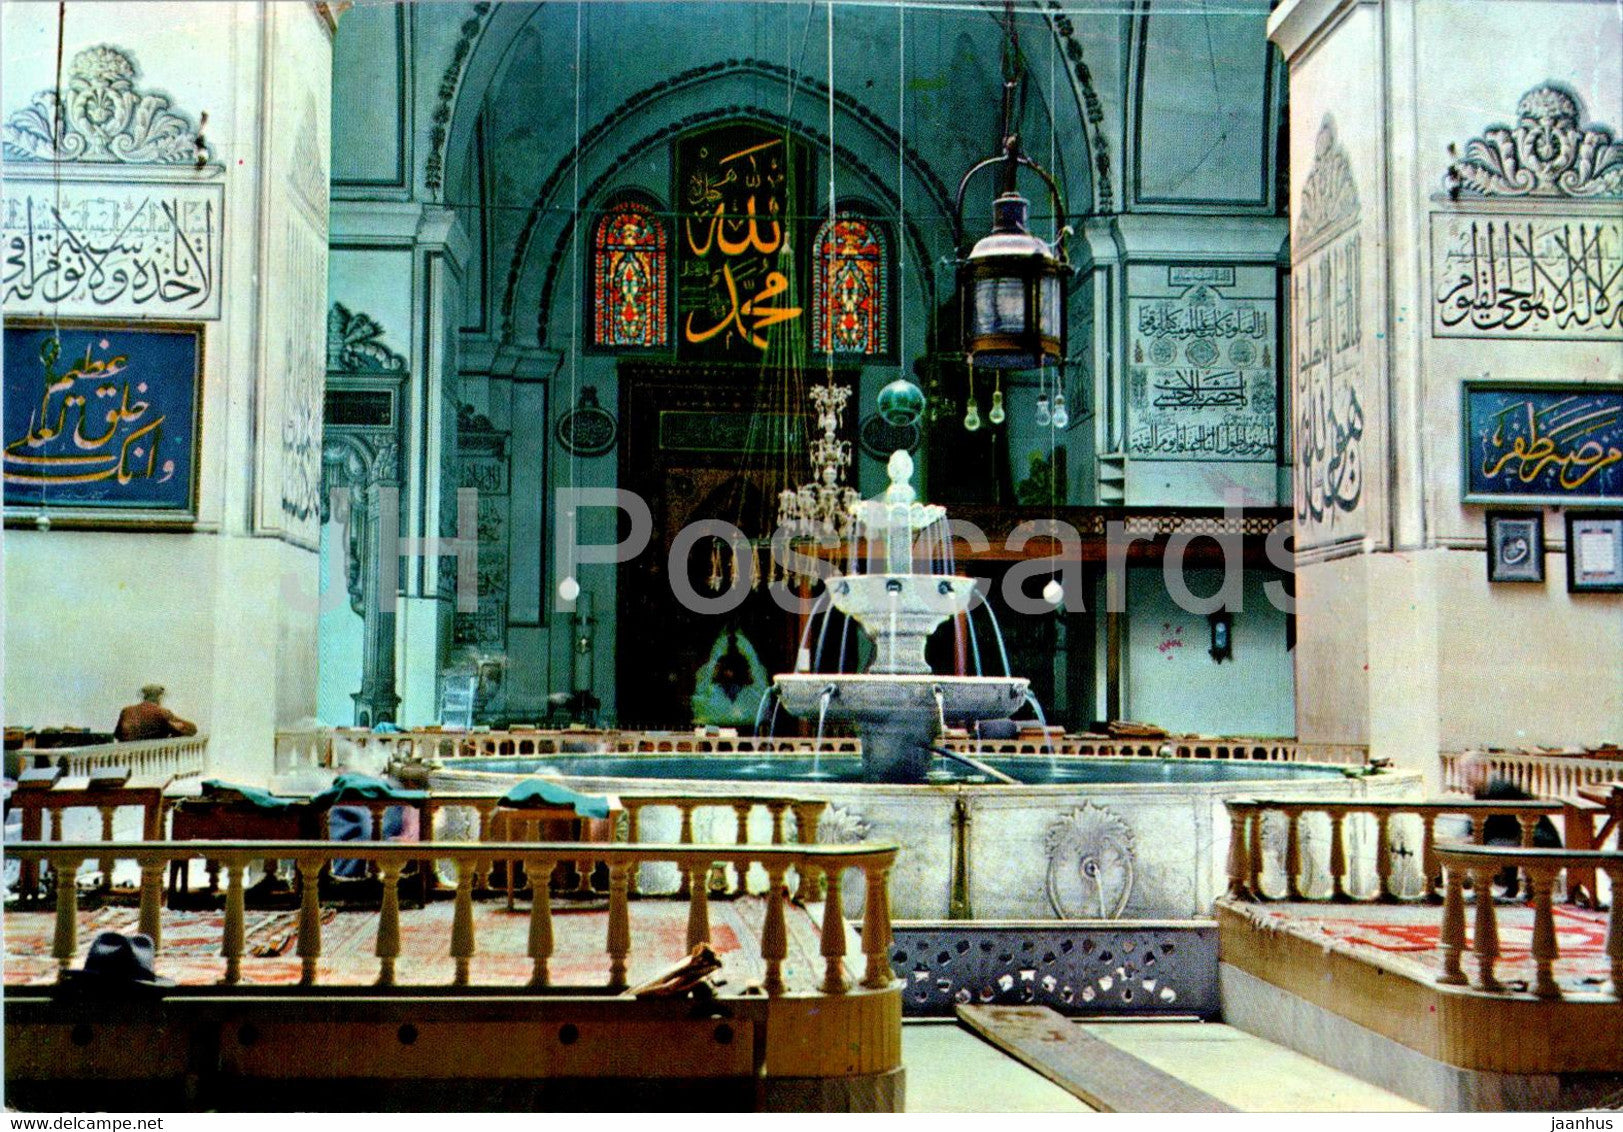 Bursa - Ulu camii ici - Interior of Ulu Cami - 551 - Turkey - unused - JH Postcards